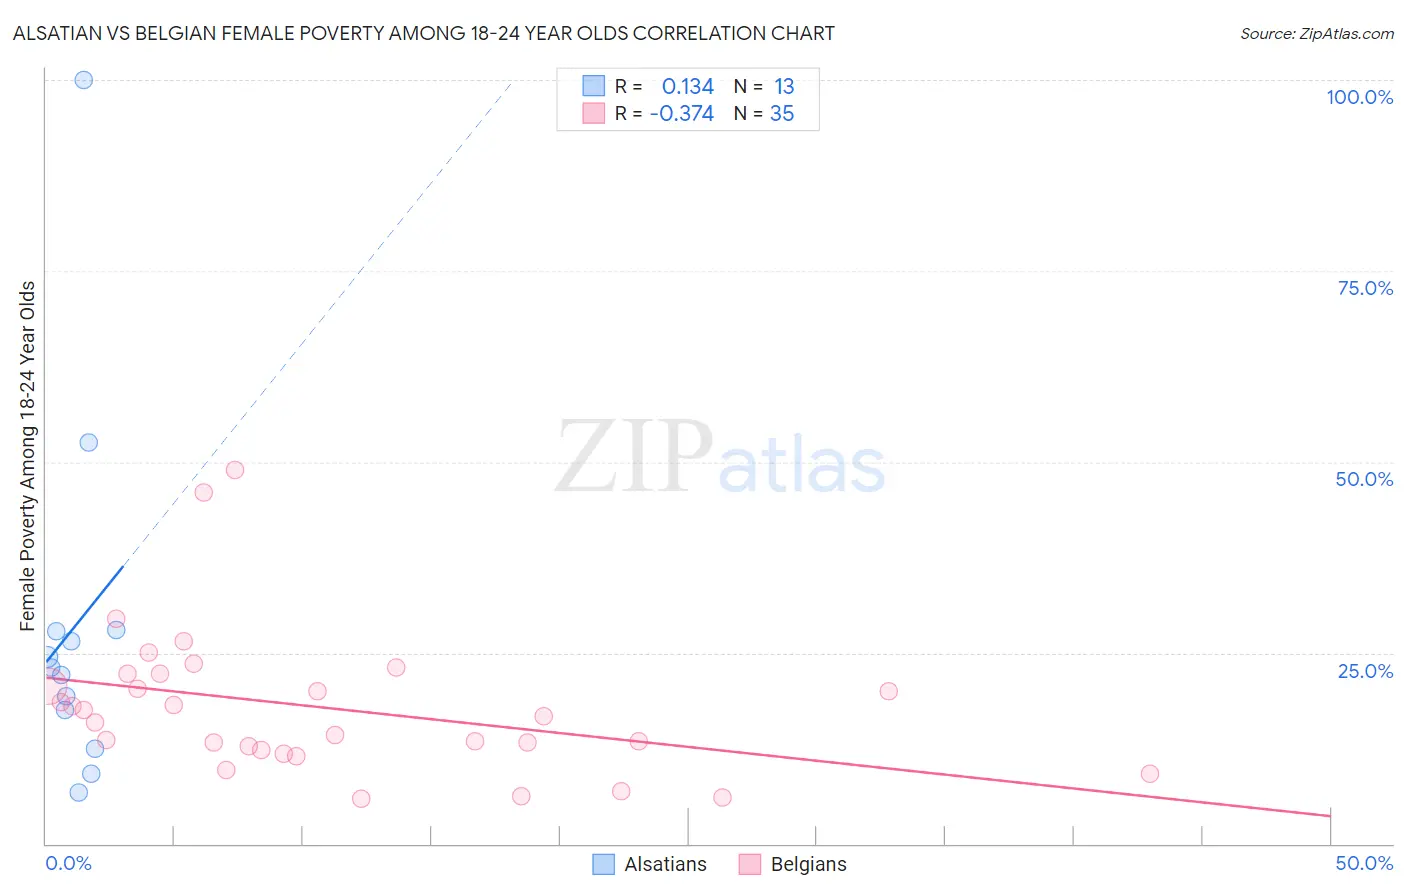 Alsatian vs Belgian Female Poverty Among 18-24 Year Olds